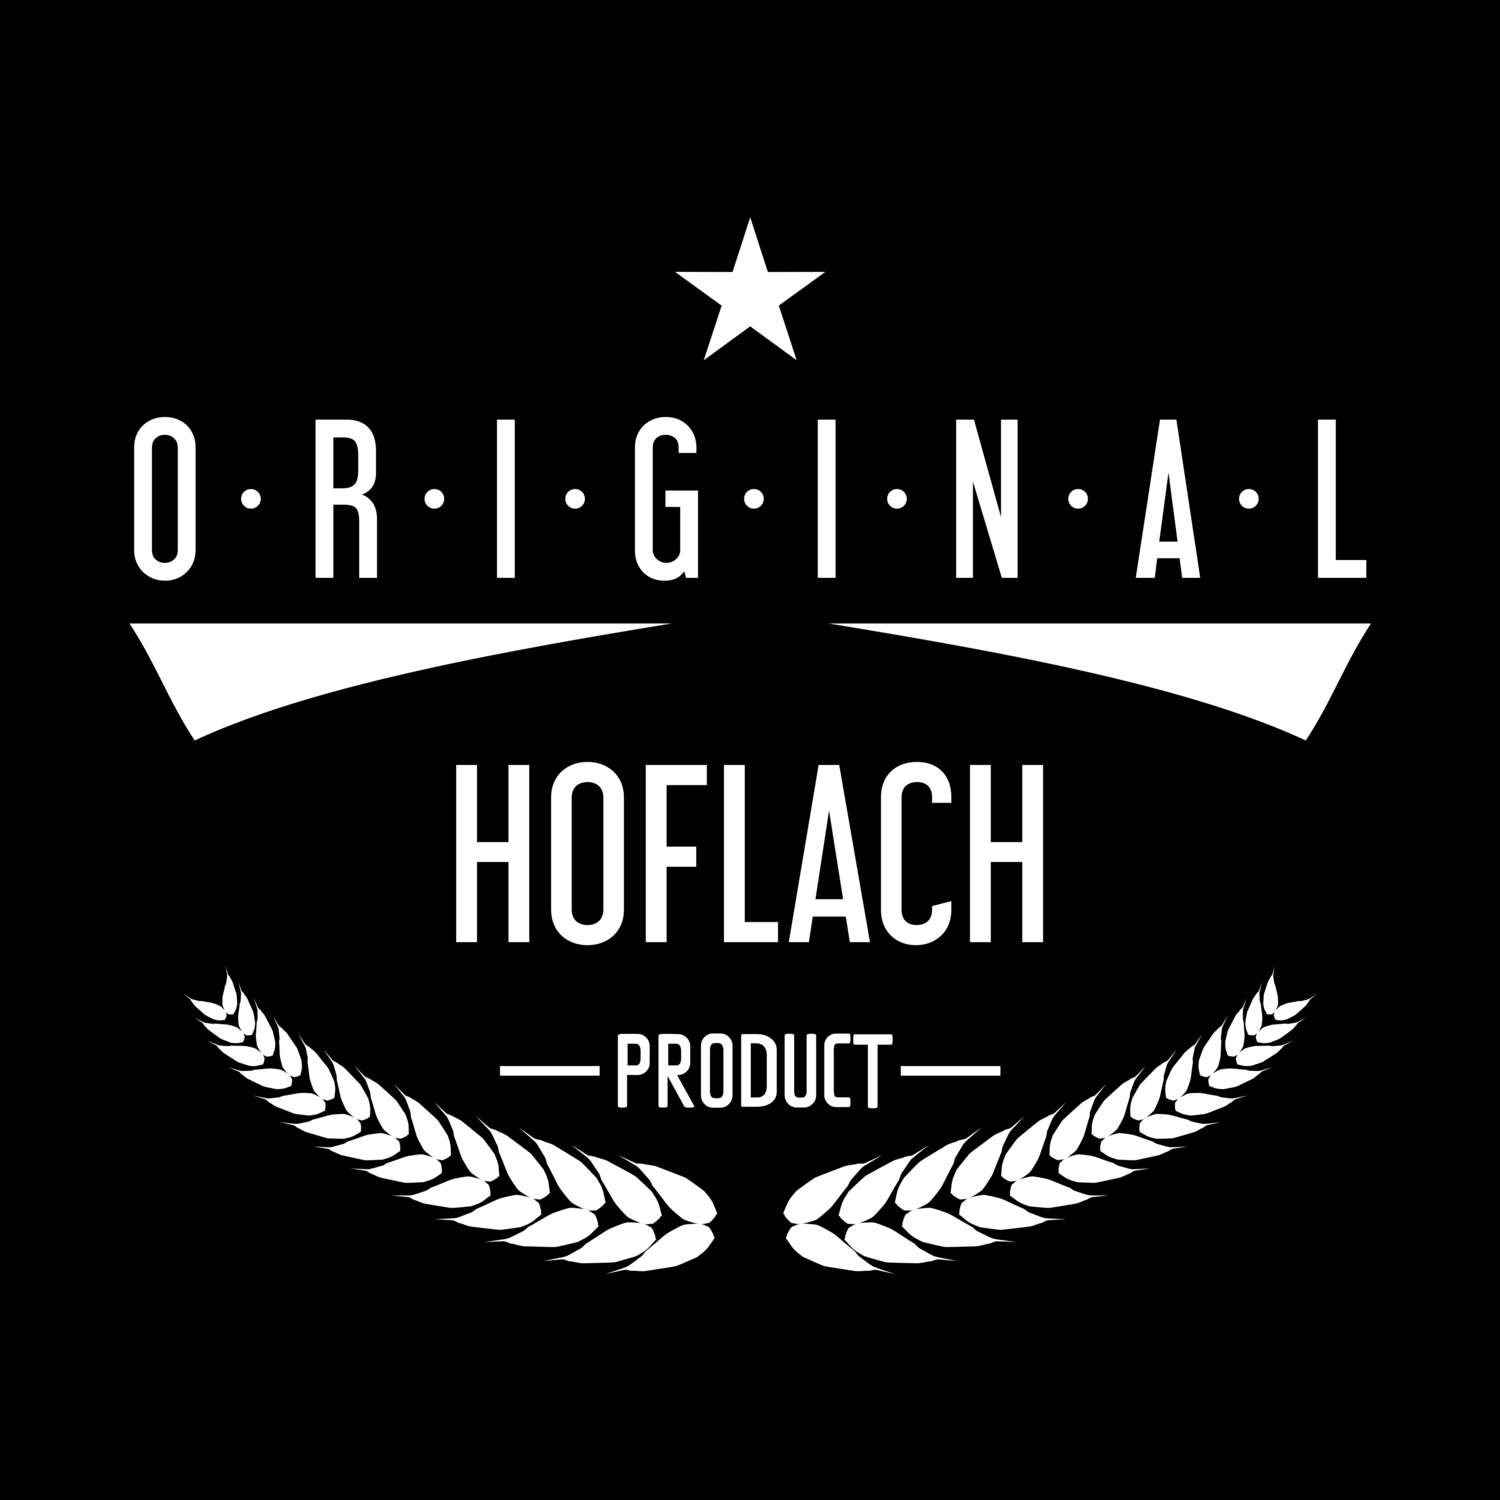 Hoflach T-Shirt »Original Product«